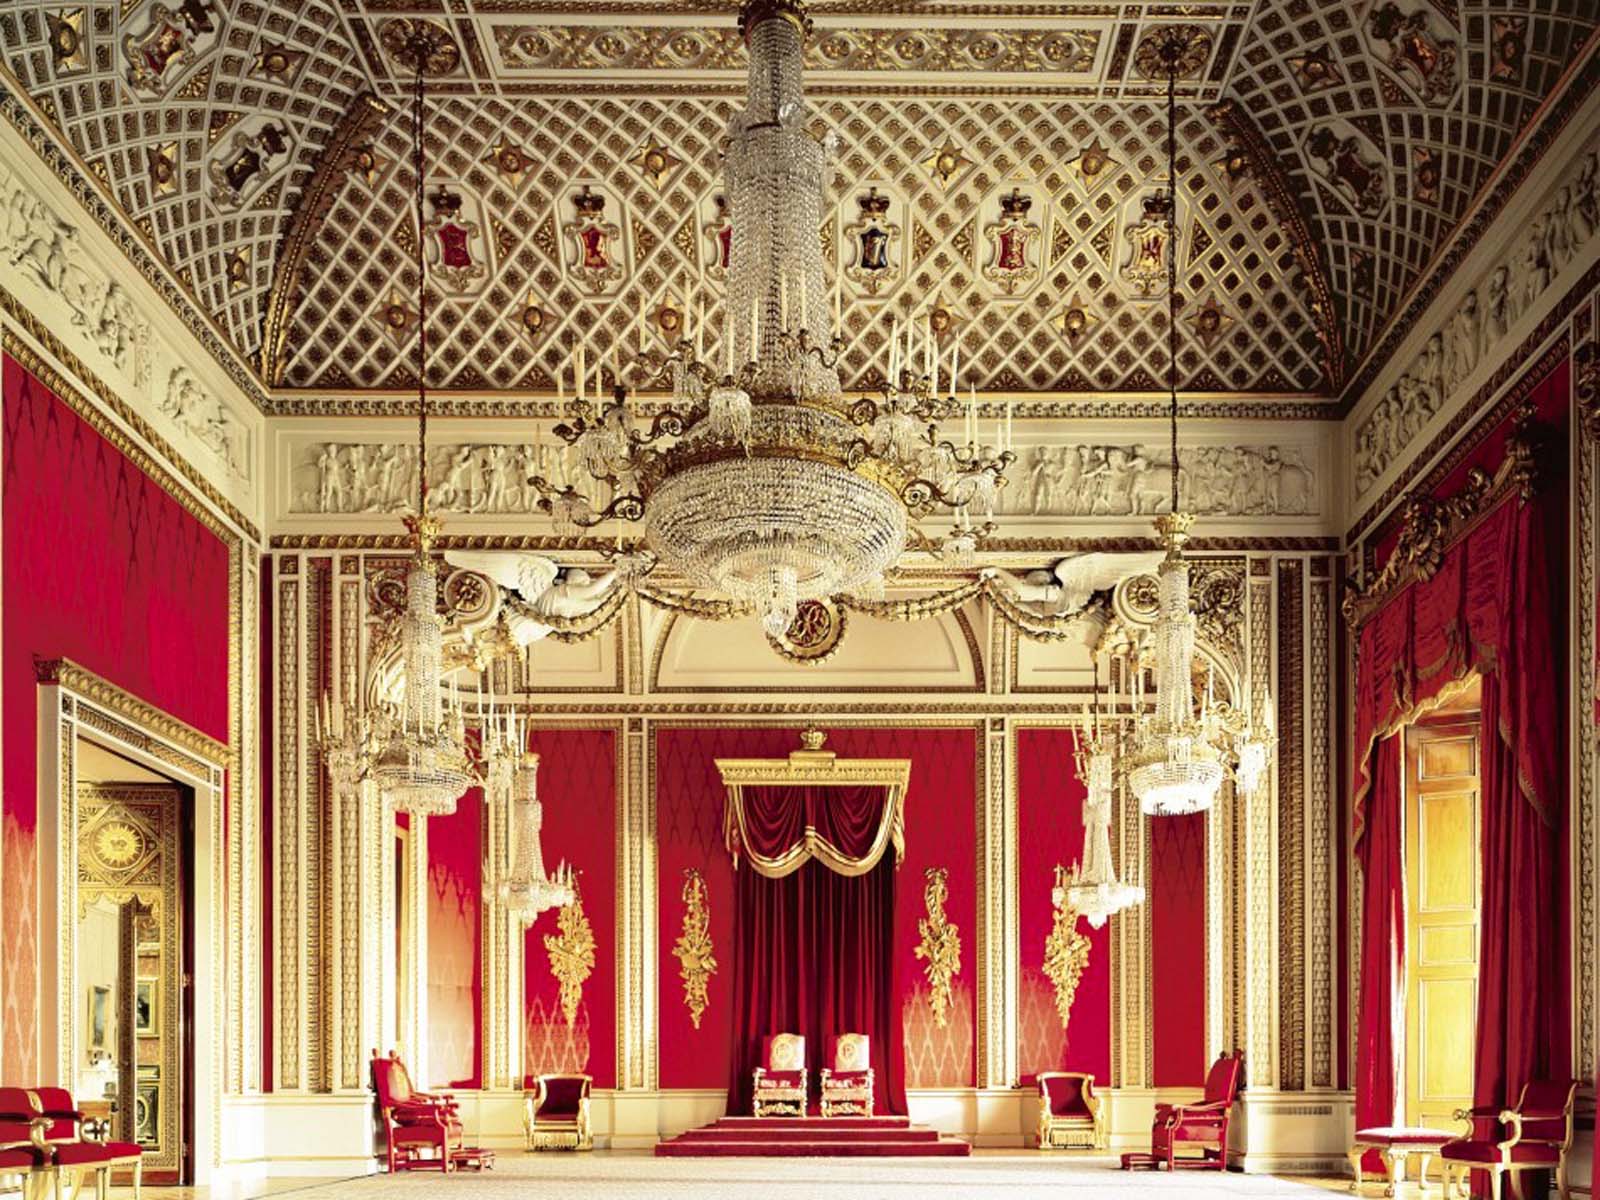 Buckingham Palace Interior Wallpaper, Buckingham Palace Wallpaper